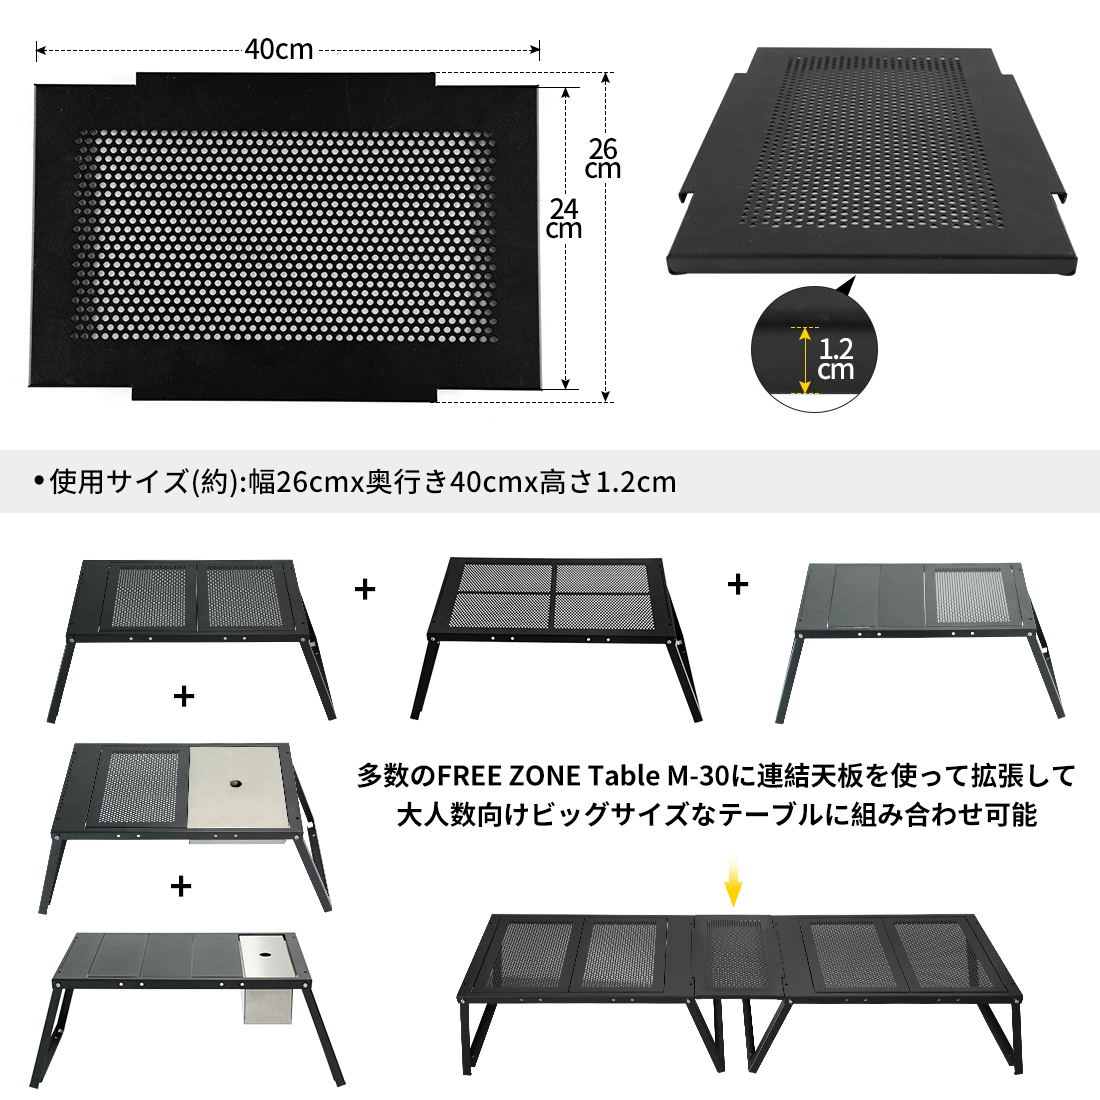 Soomloomテーブル拡張天板 FREE ZONE Table M-30連結用天板 無限拡張可能